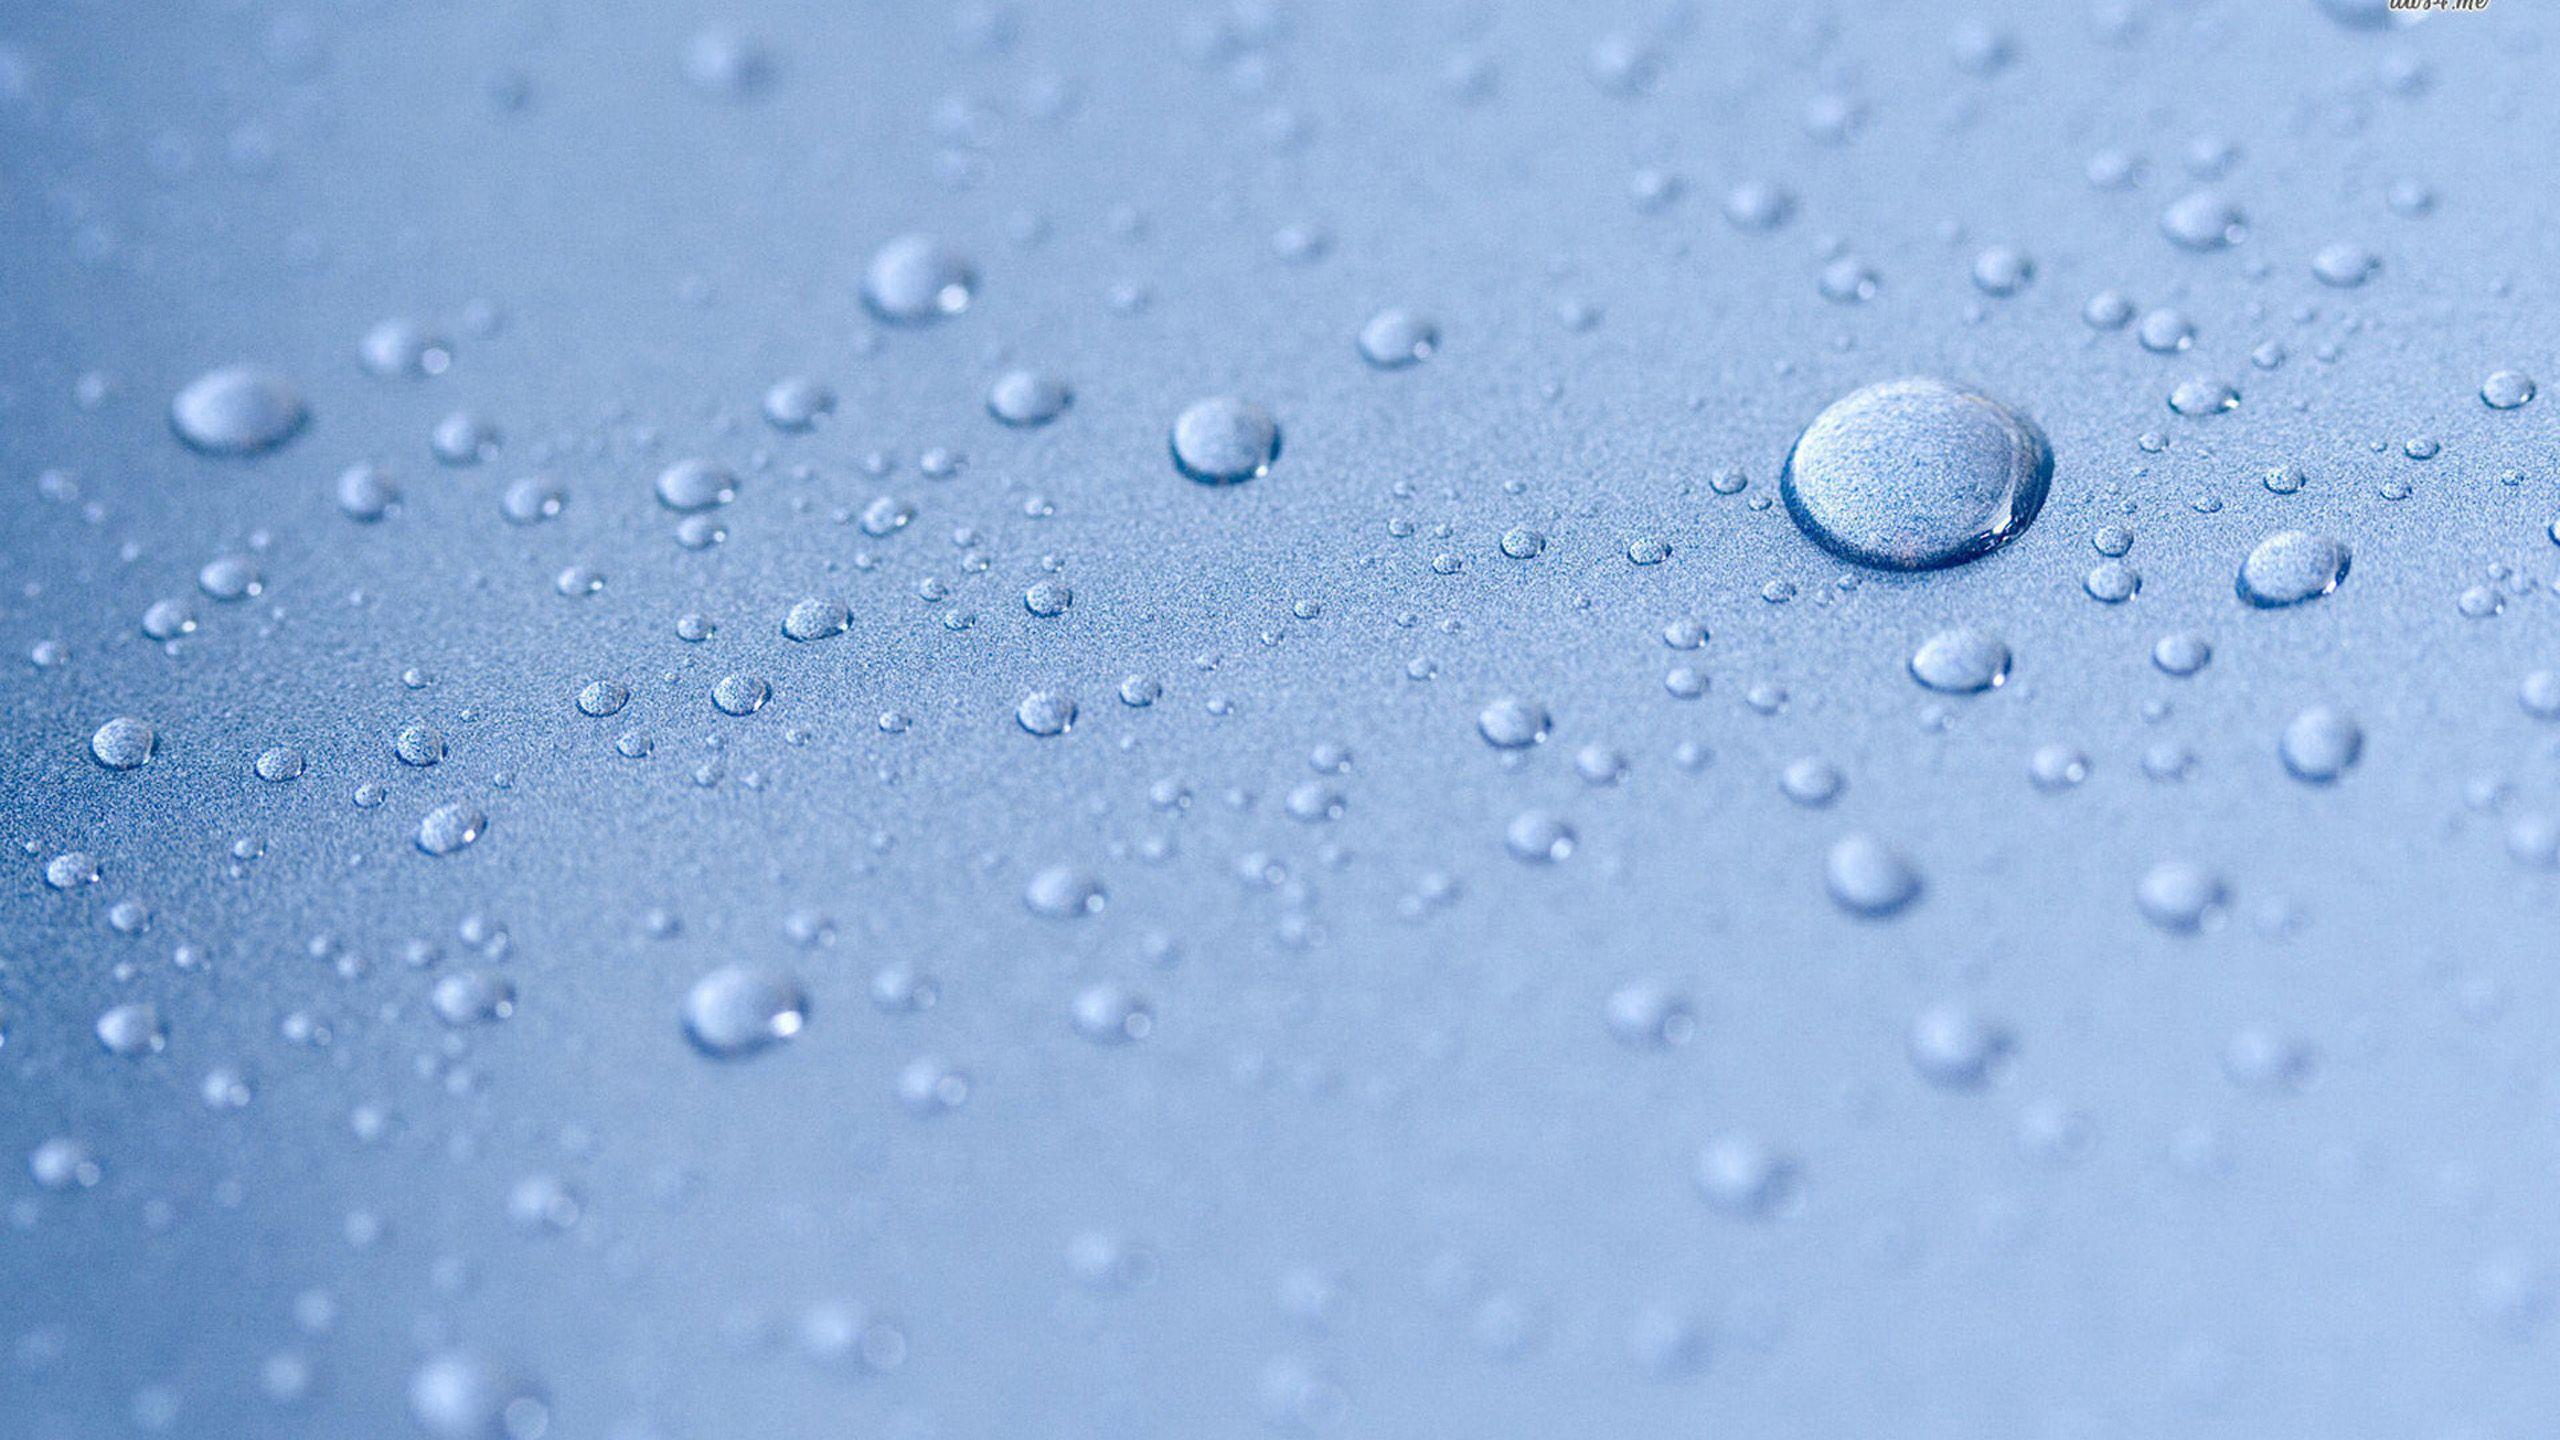 Water droplet wallpaper HD Desktop Wallpaper. Download